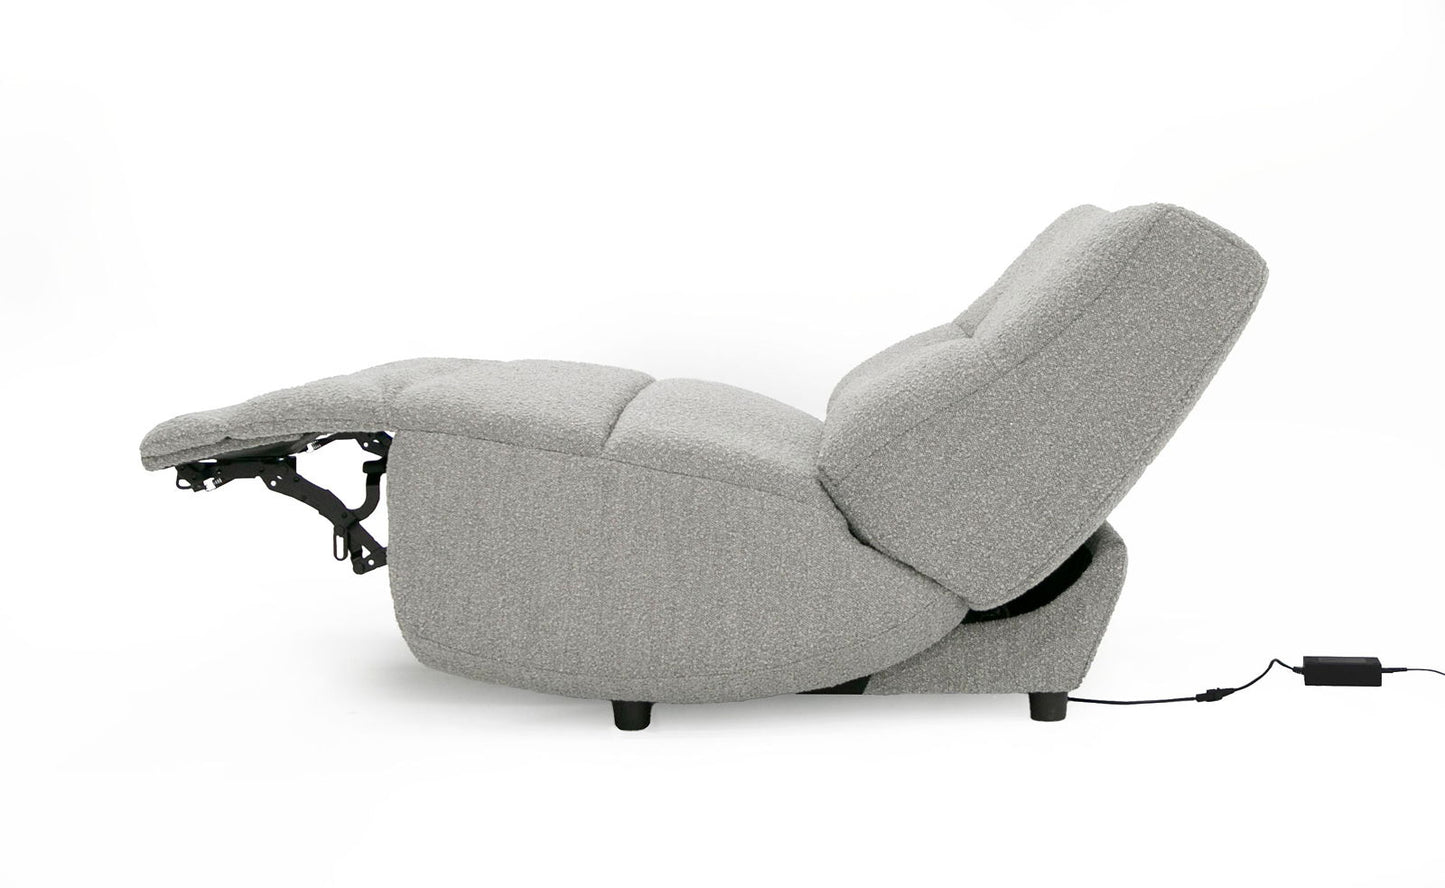 Divani Casa Basil - Modern Grey Fabric Large Electric Recliner Chair - Mac & Mabel